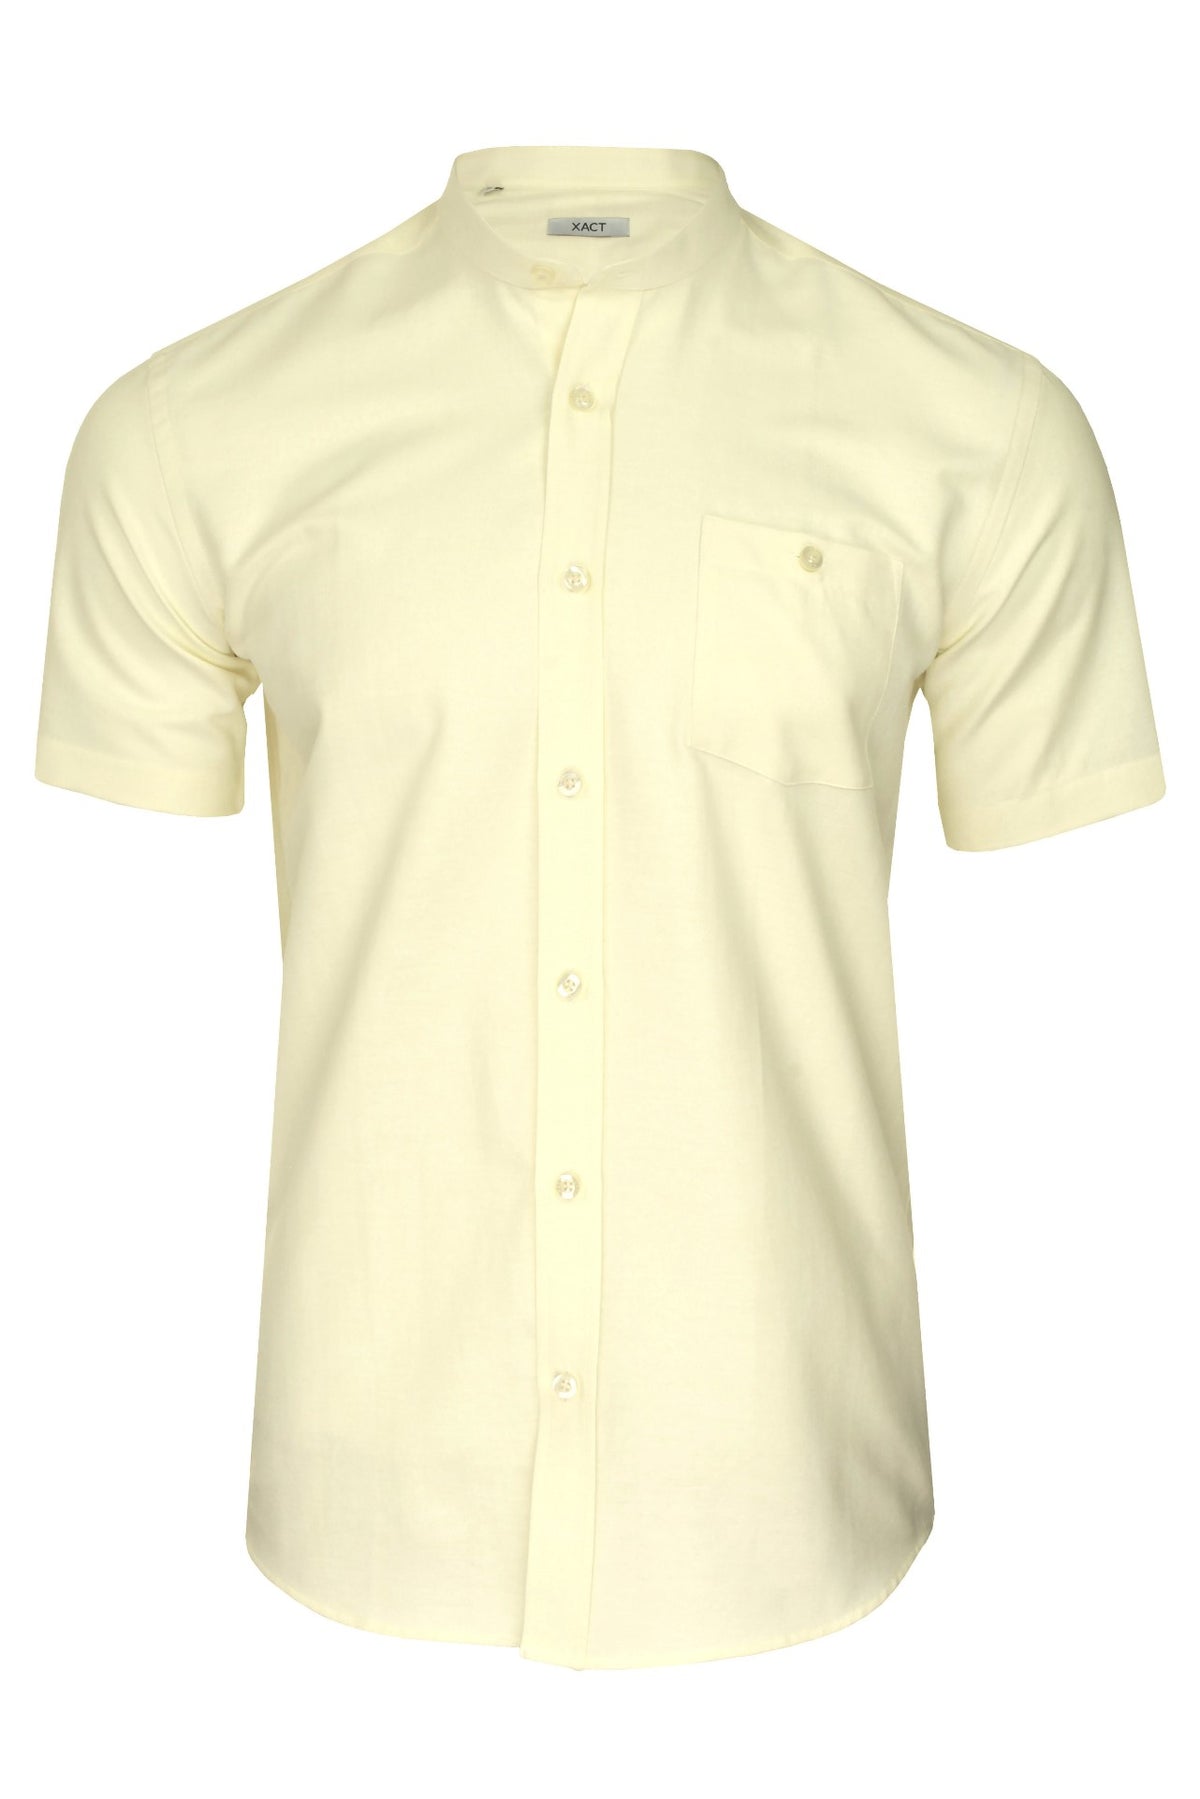 Xact Men's Grandad Collar Oxford Shirt Slim Fit Short Sleeved, 01, Xsh1022, Yellow